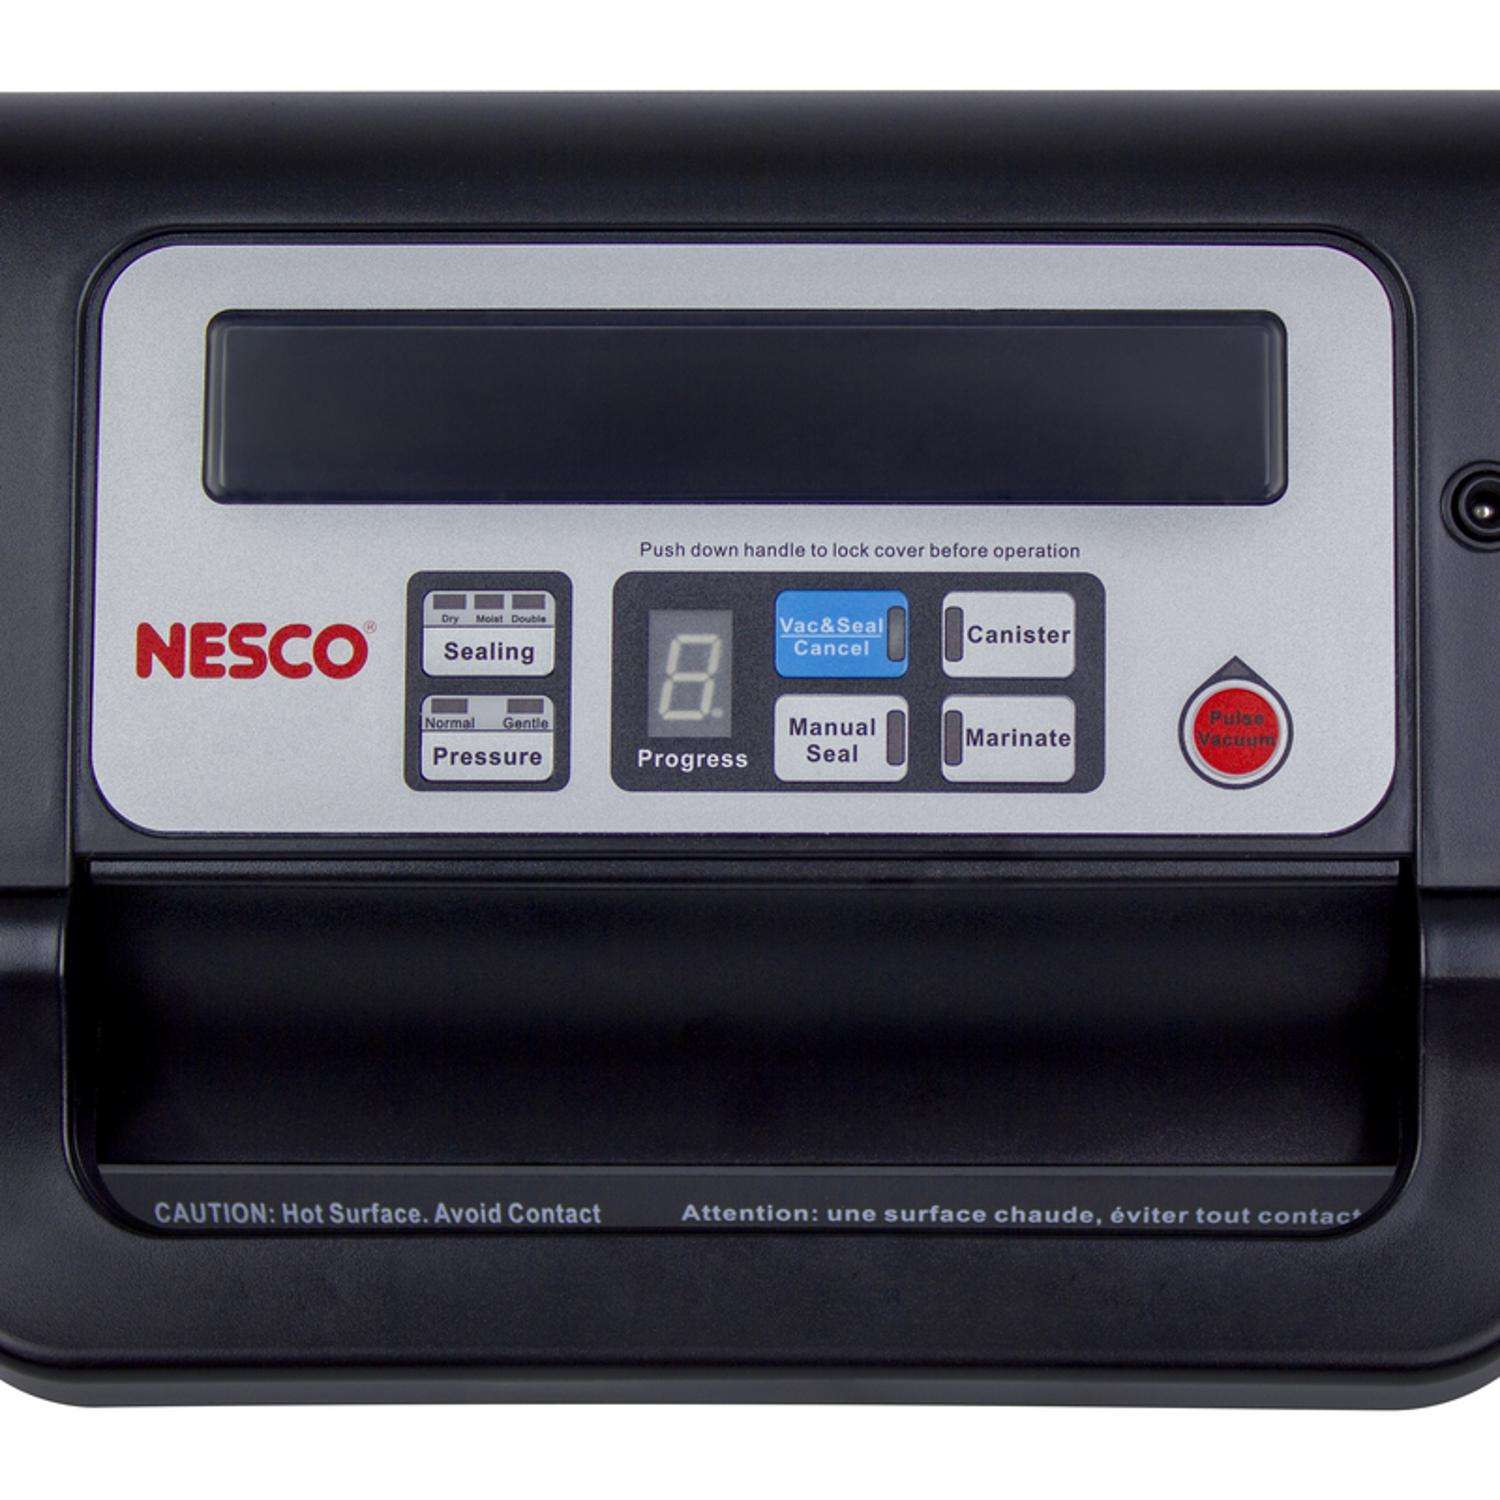 Nesco Black/Silver Food Vacuum Sealer with Digital Scale - Ace Hardware